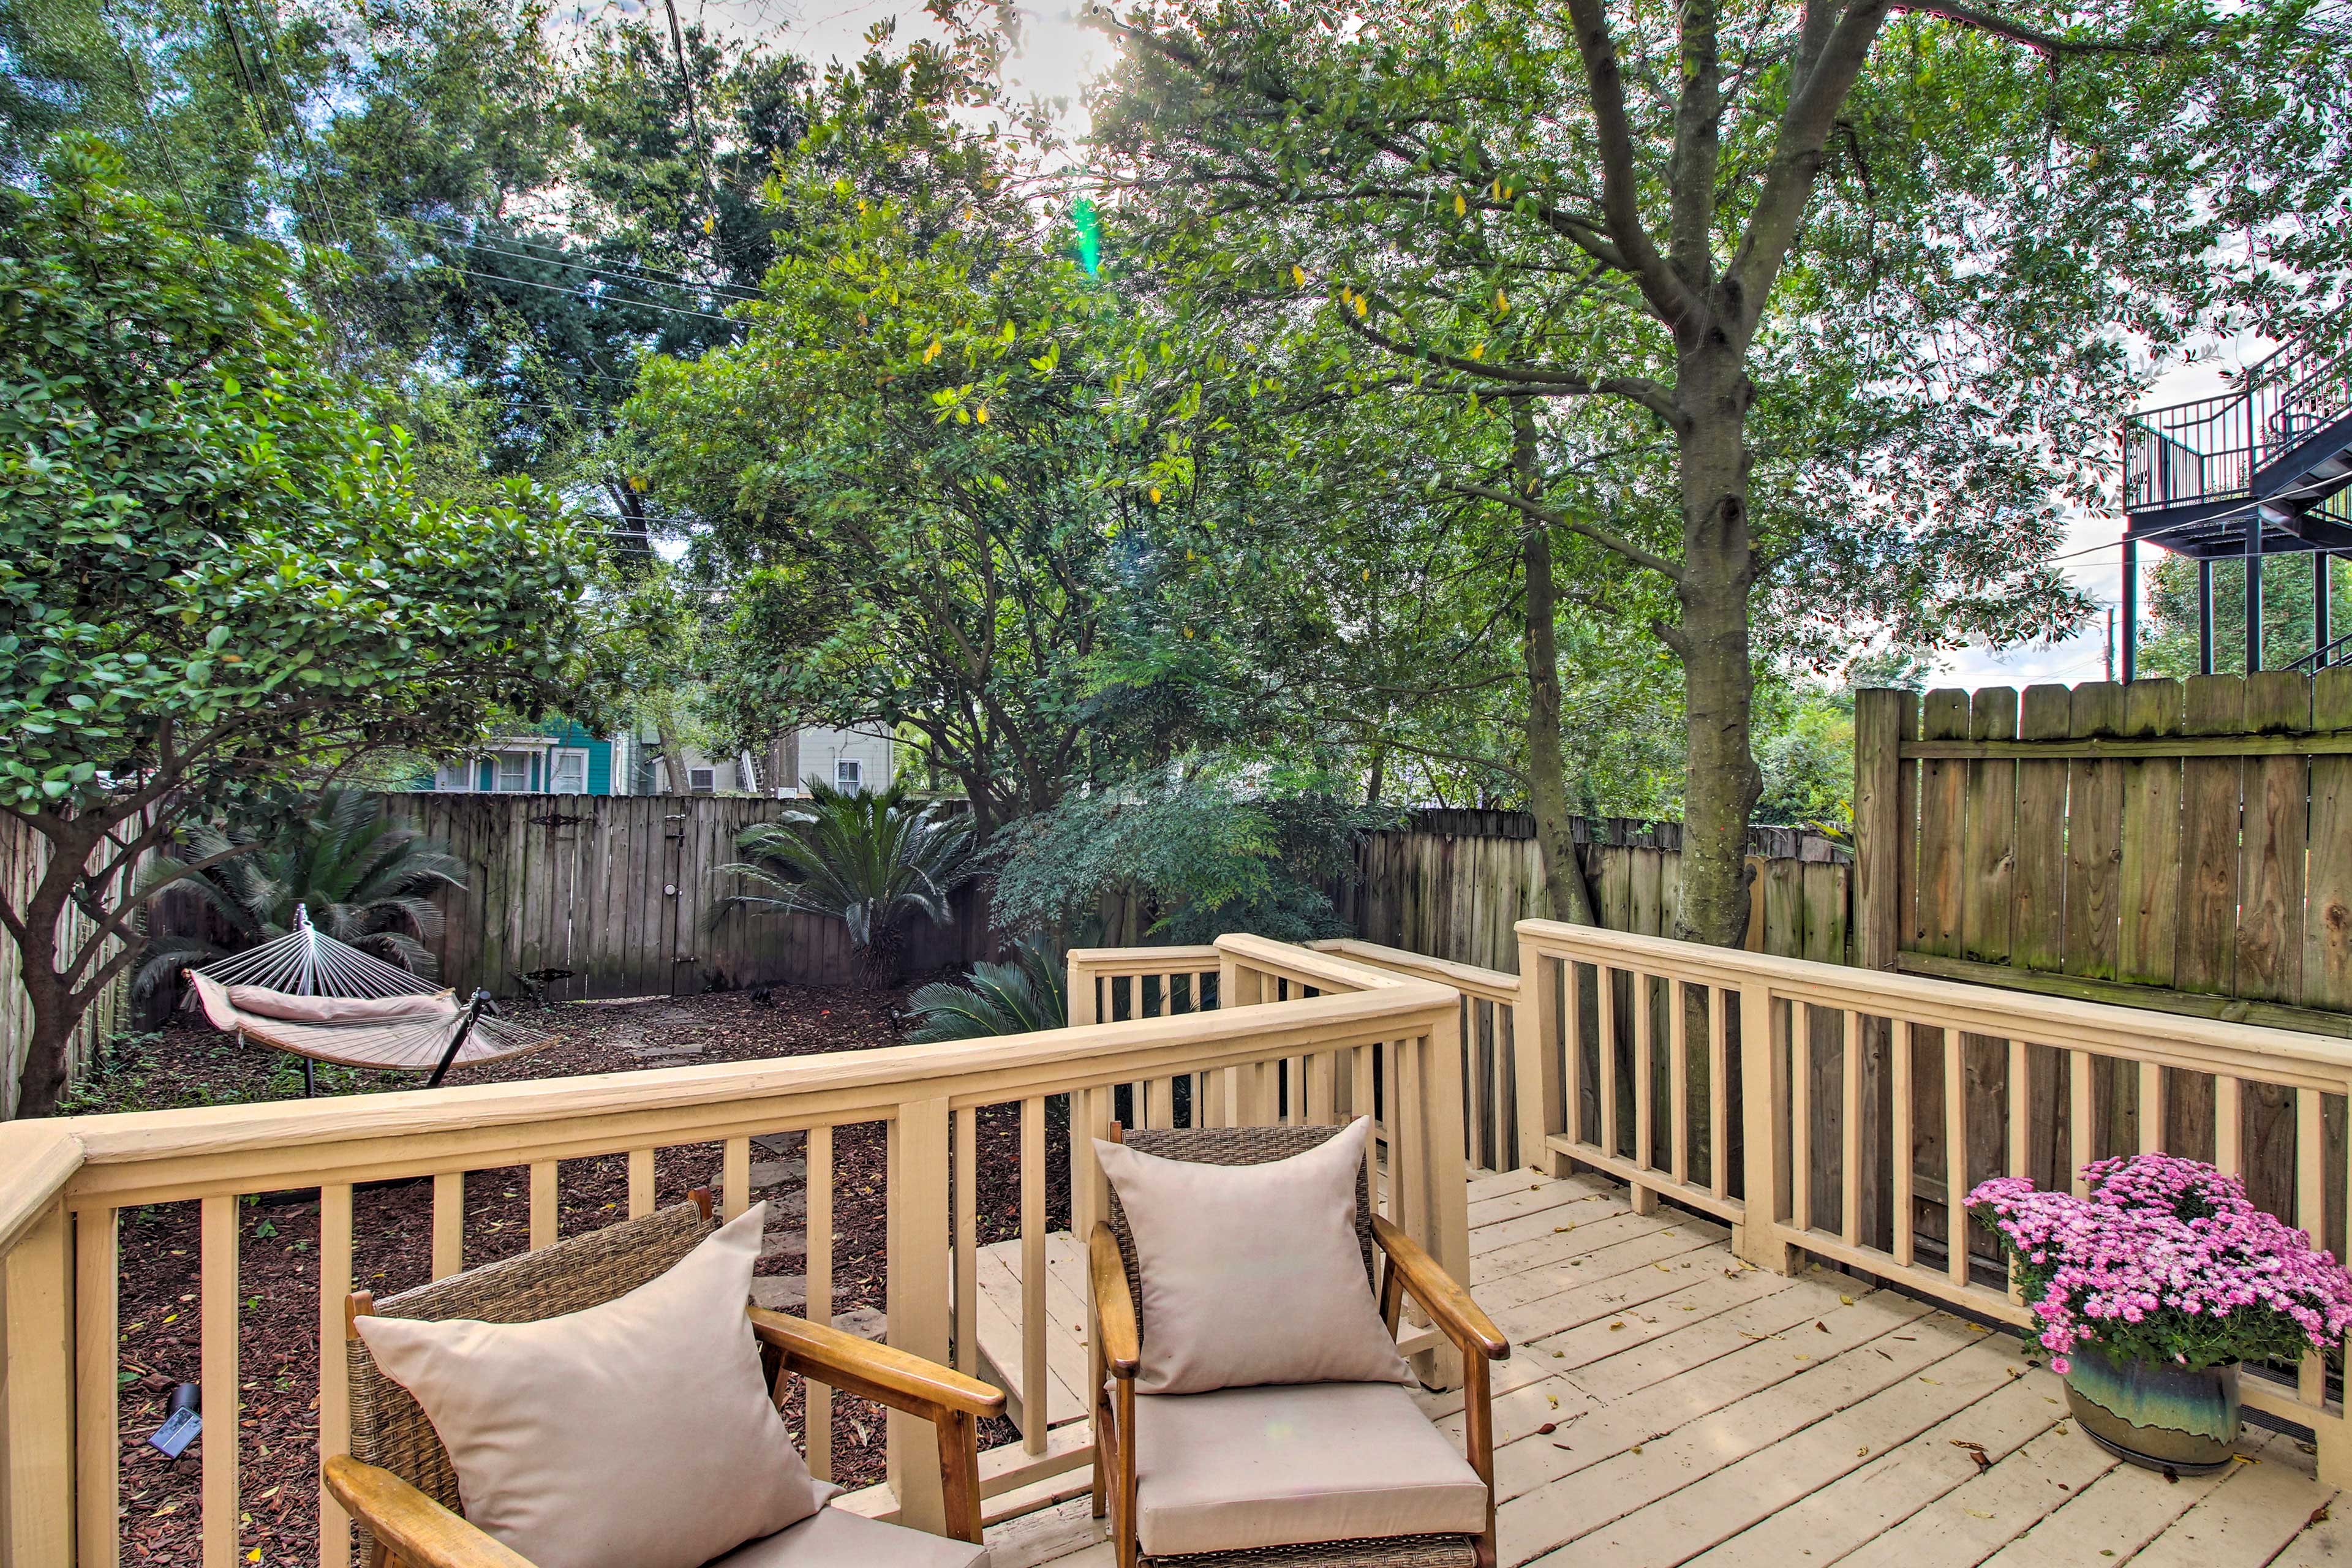 Furnished Deck | Private Backyard